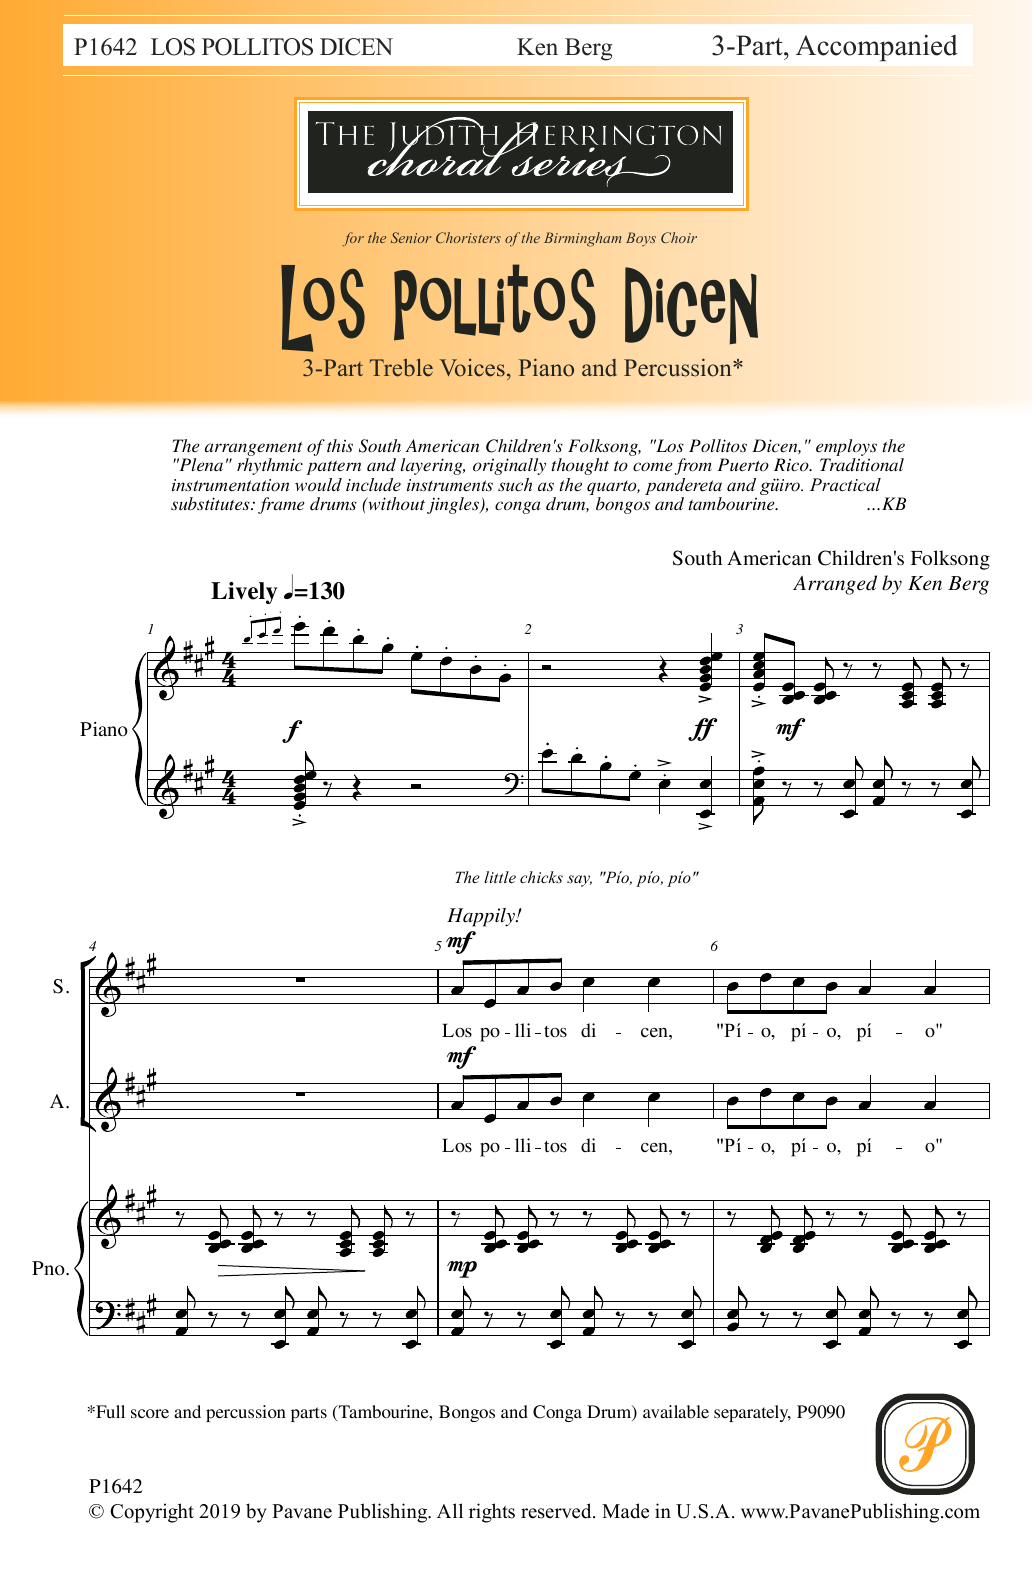 South American Children's Folksong Los Pollitos Dicen (Ken Berg) Sheet Music Notes & Chords for Choir - Download or Print PDF